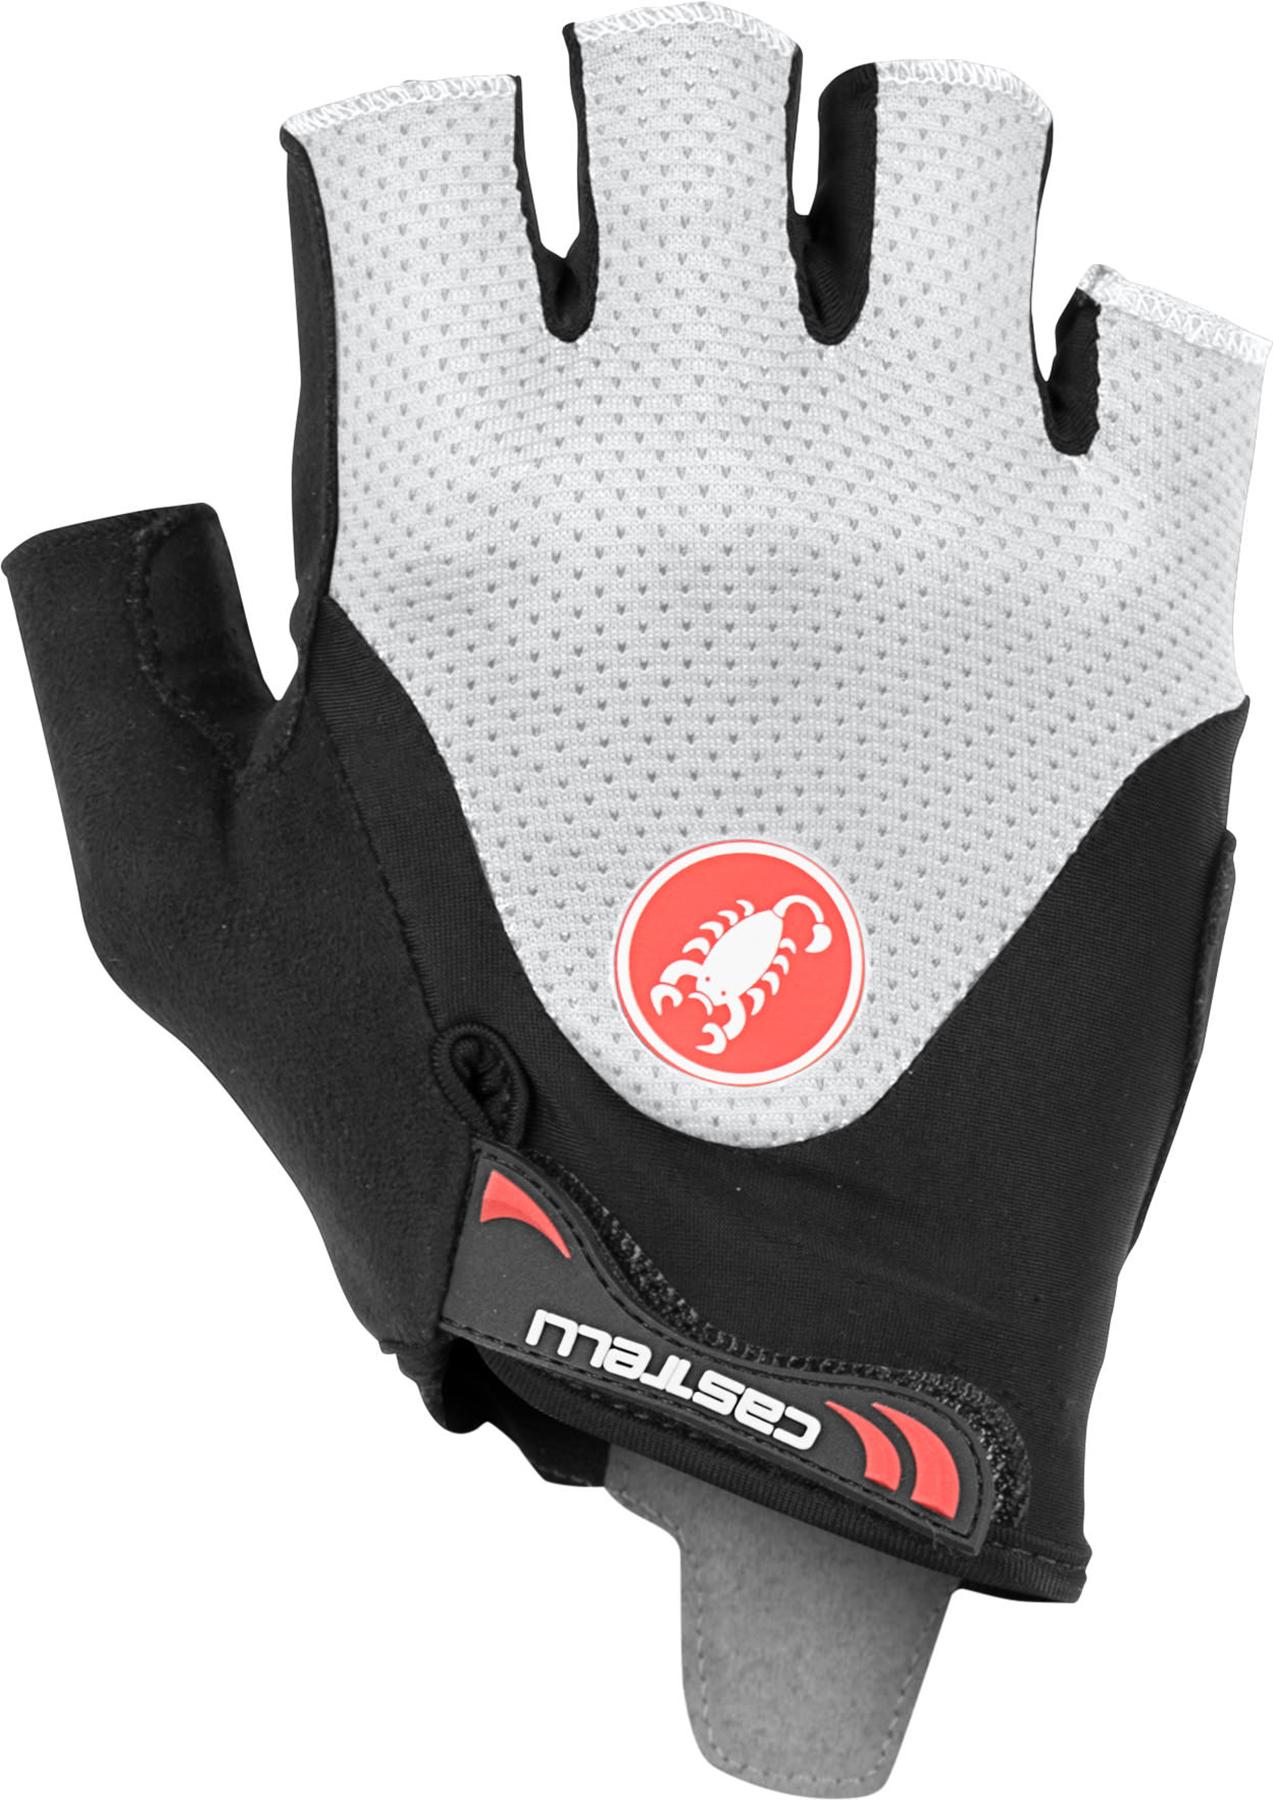 Castelli Arenberg Gel 2 Cycling Gloves - Black/ivory